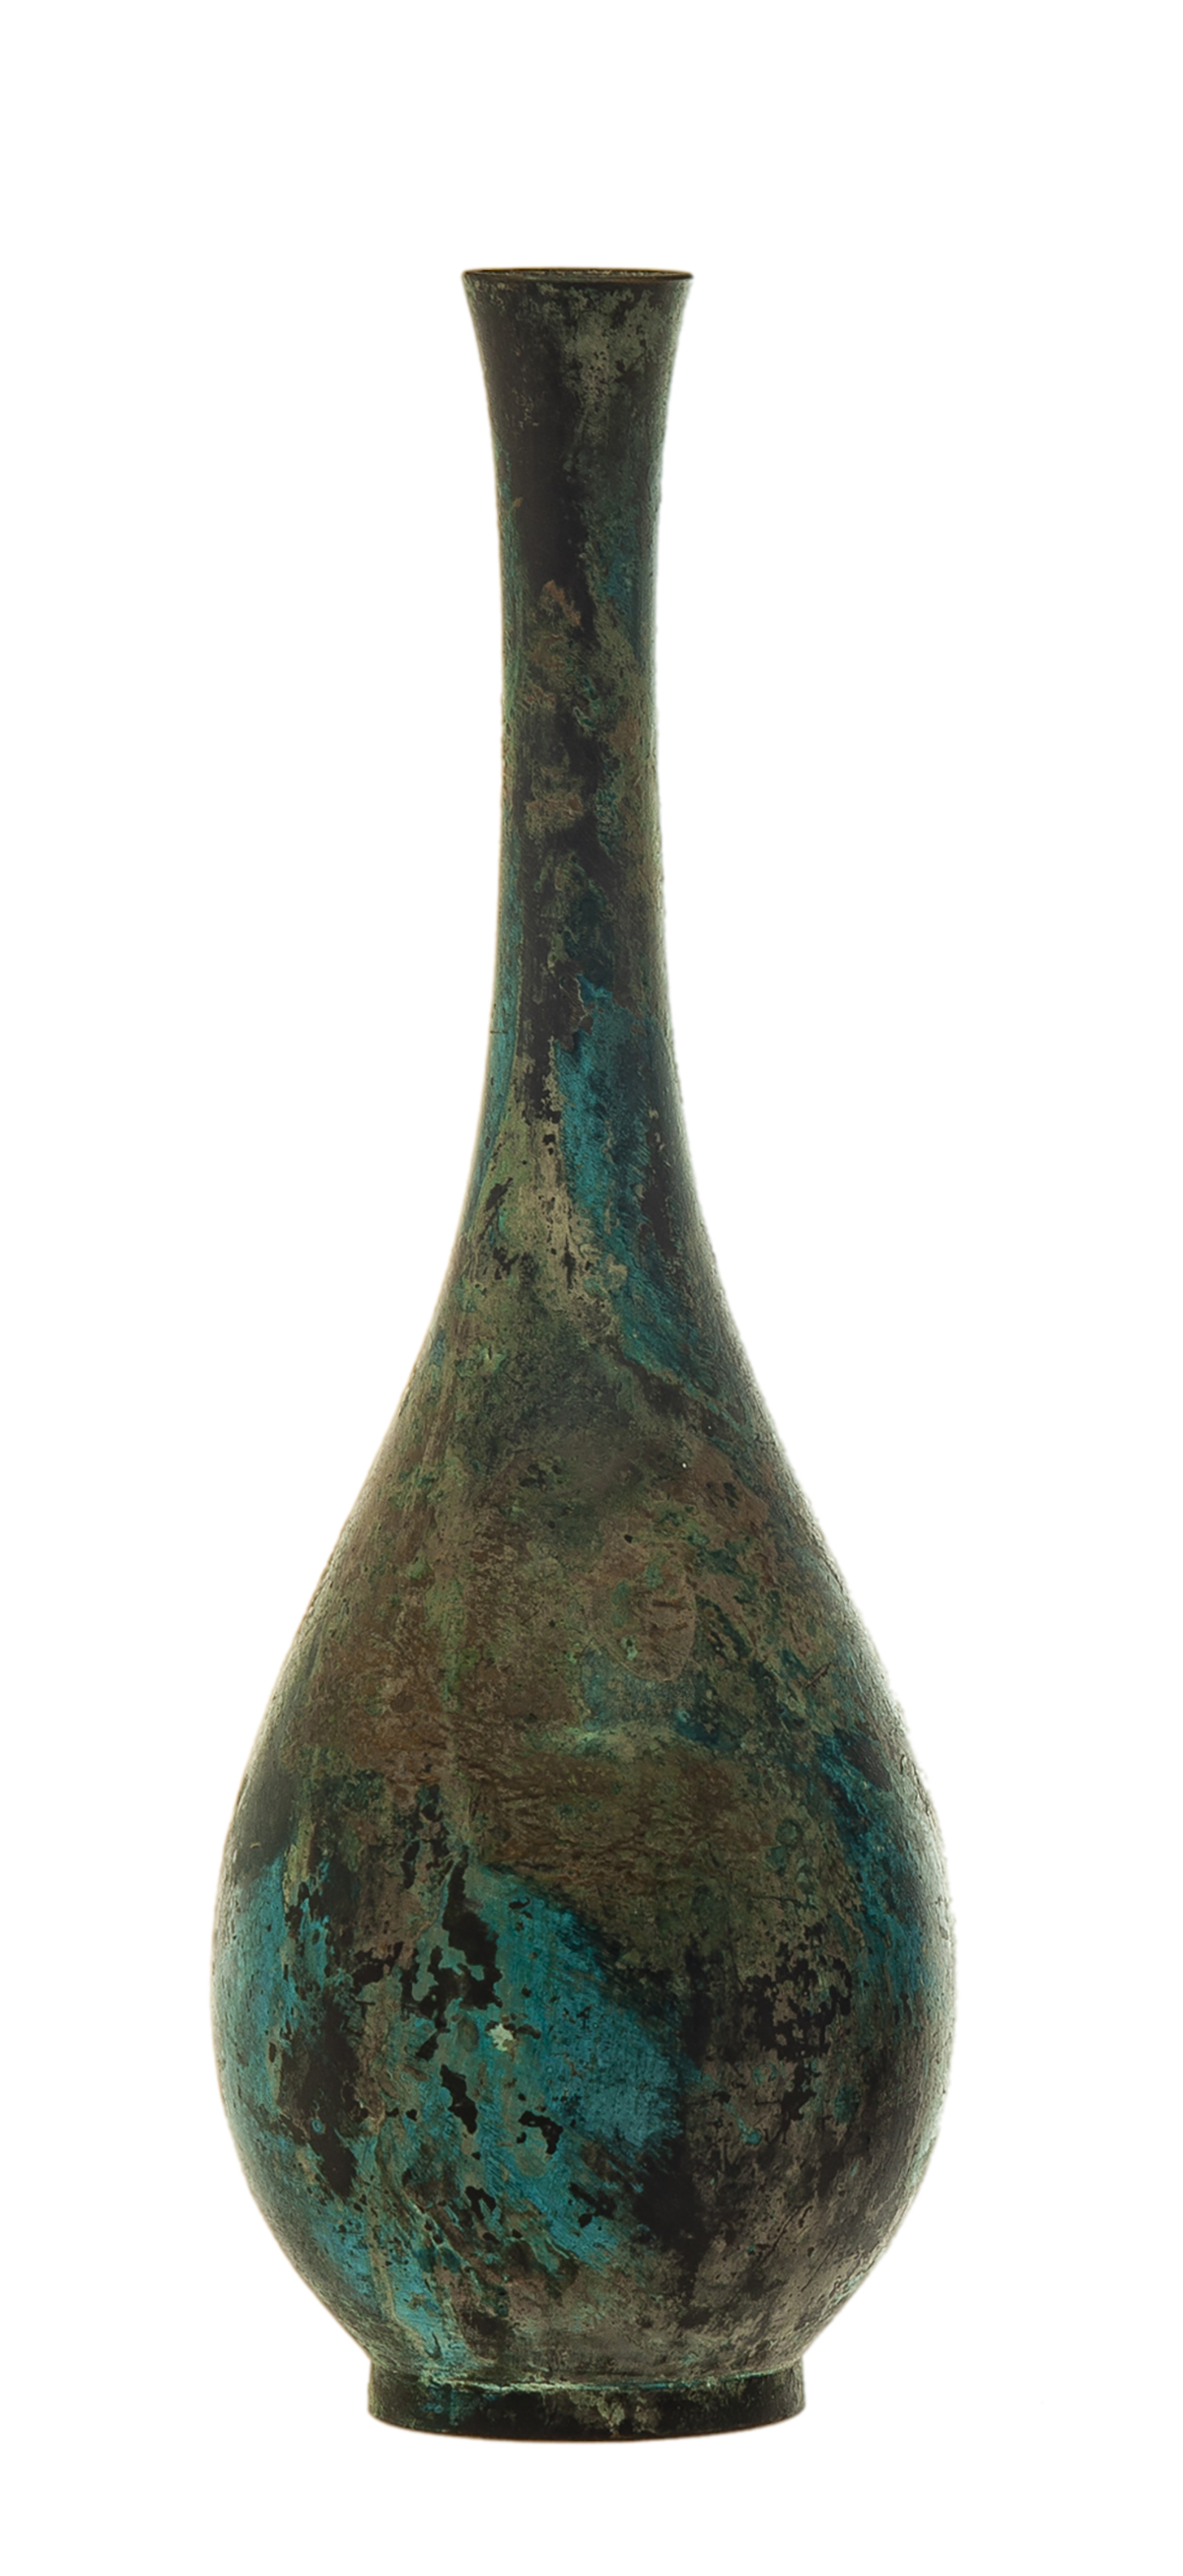 Japanese Bud Vase w/ Patina Green Patina~P77662026